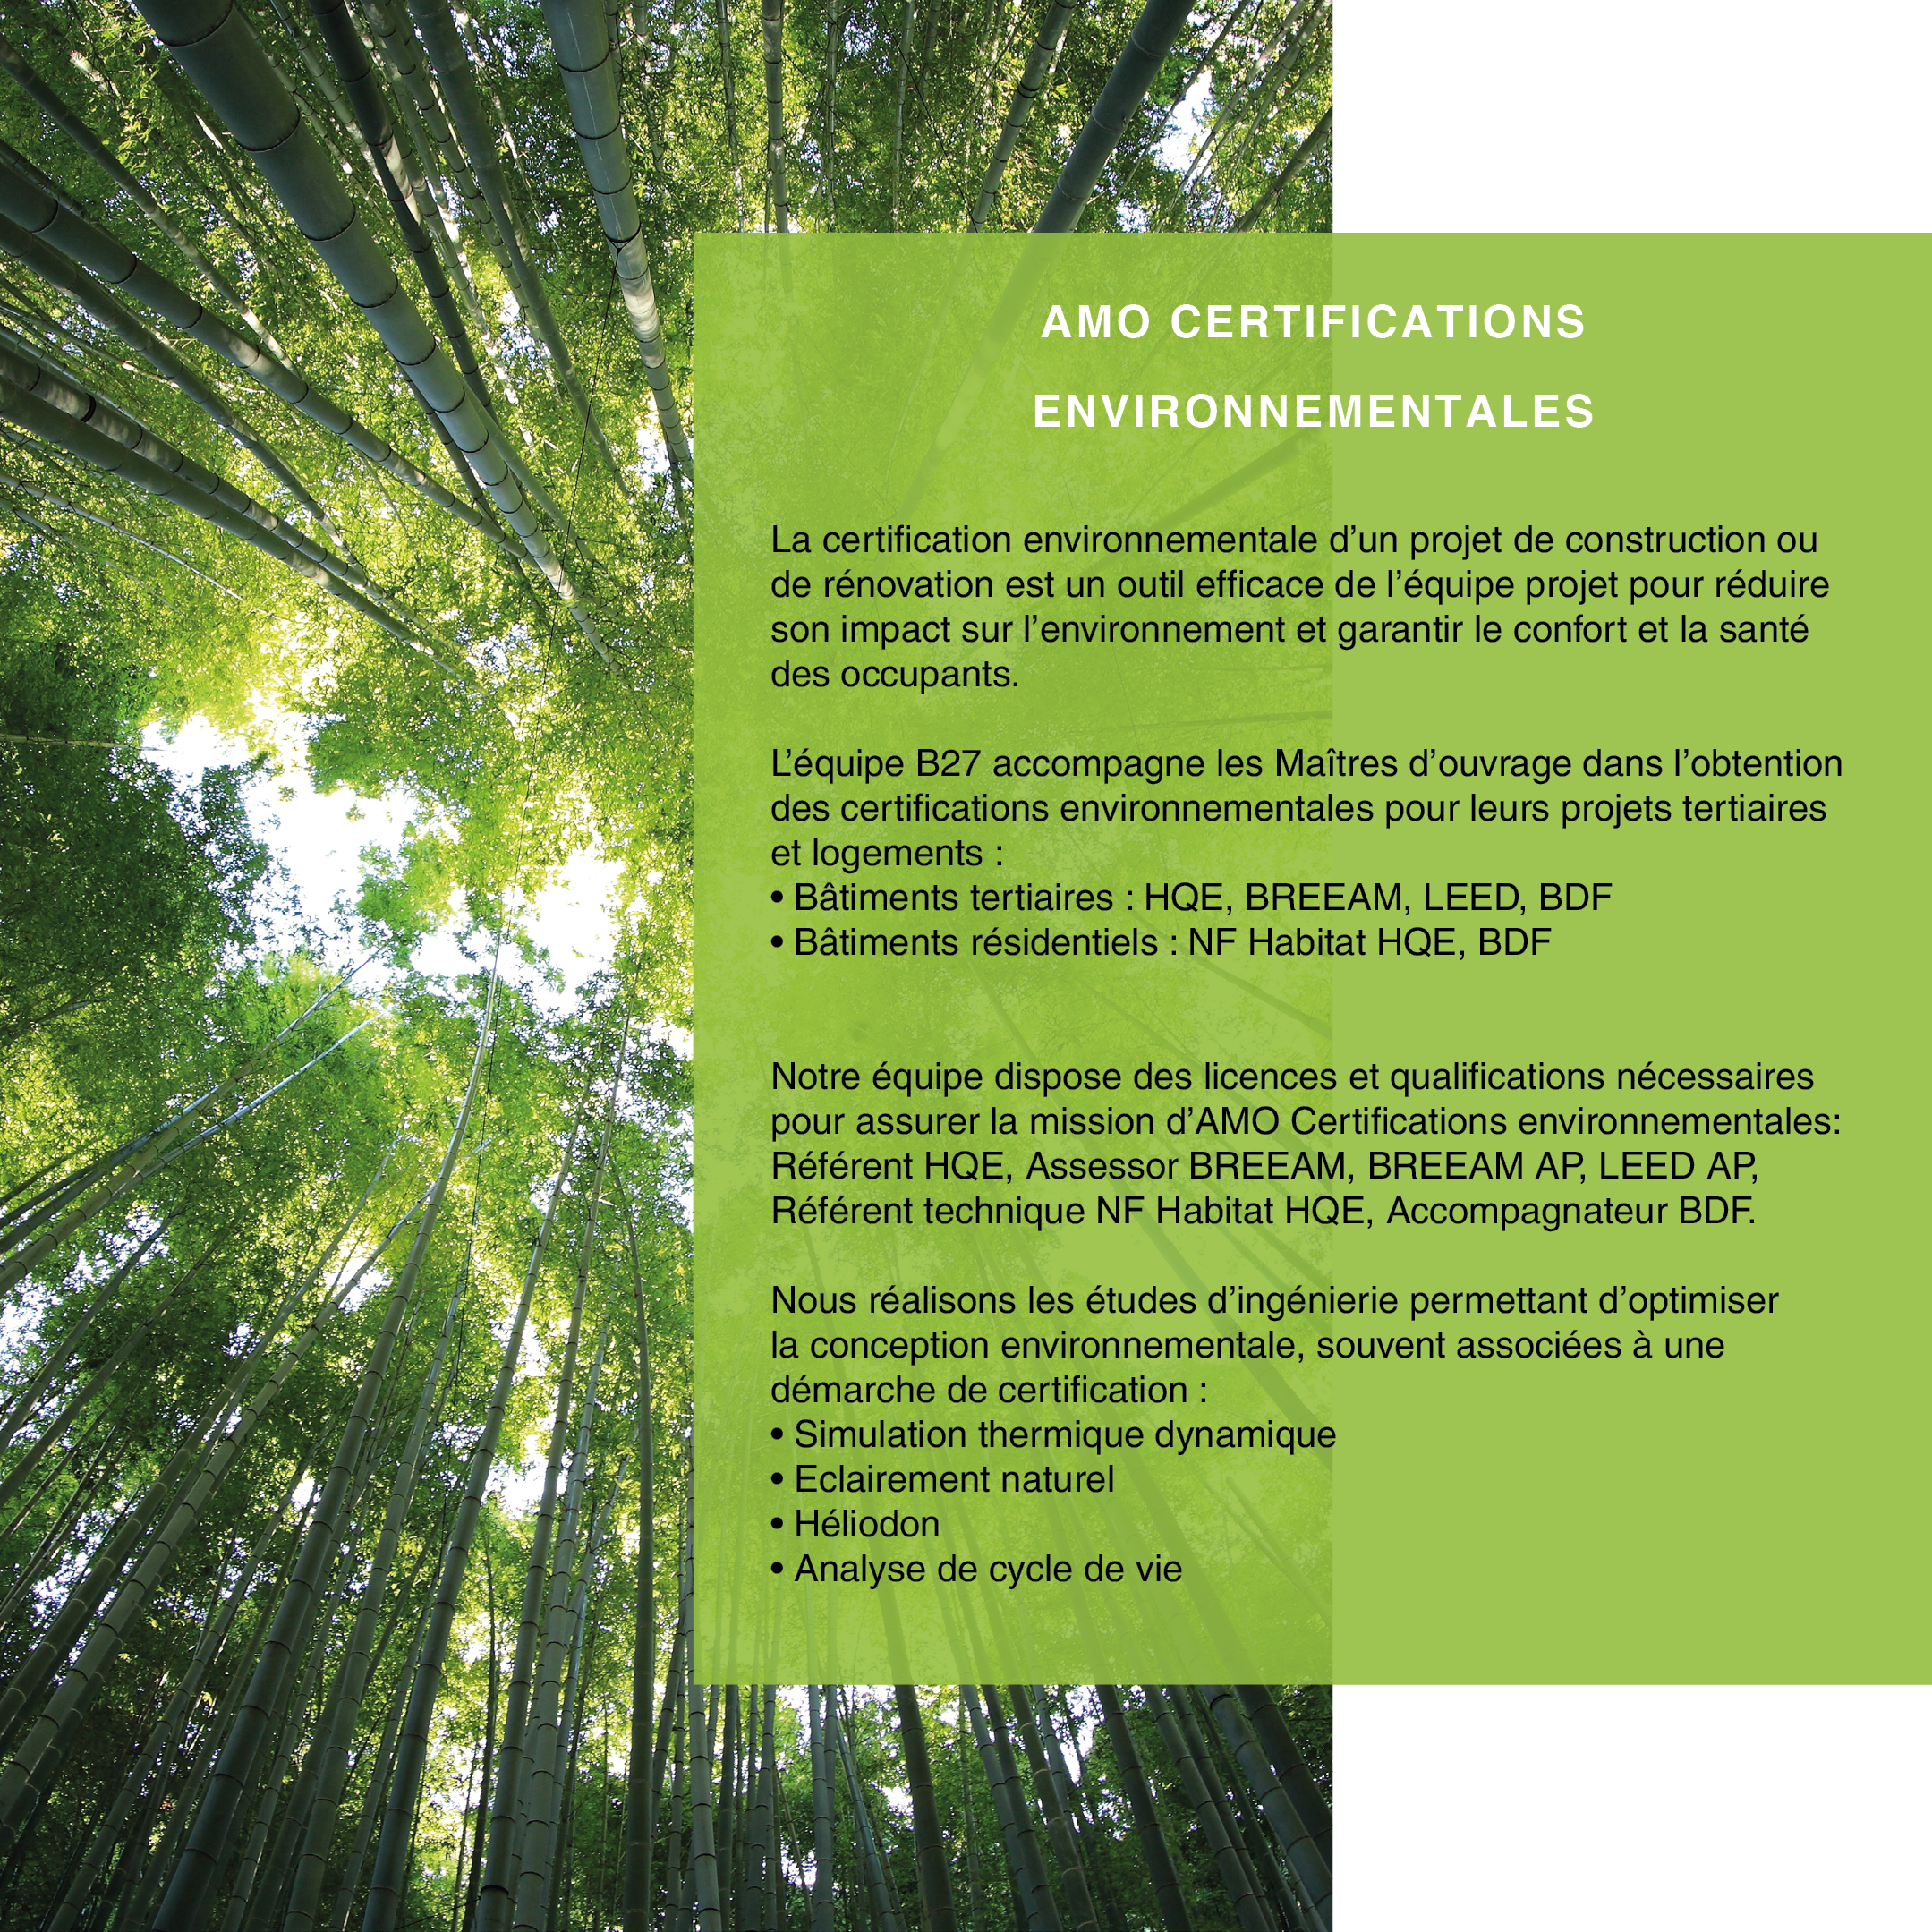 AMO Certifications environnementales